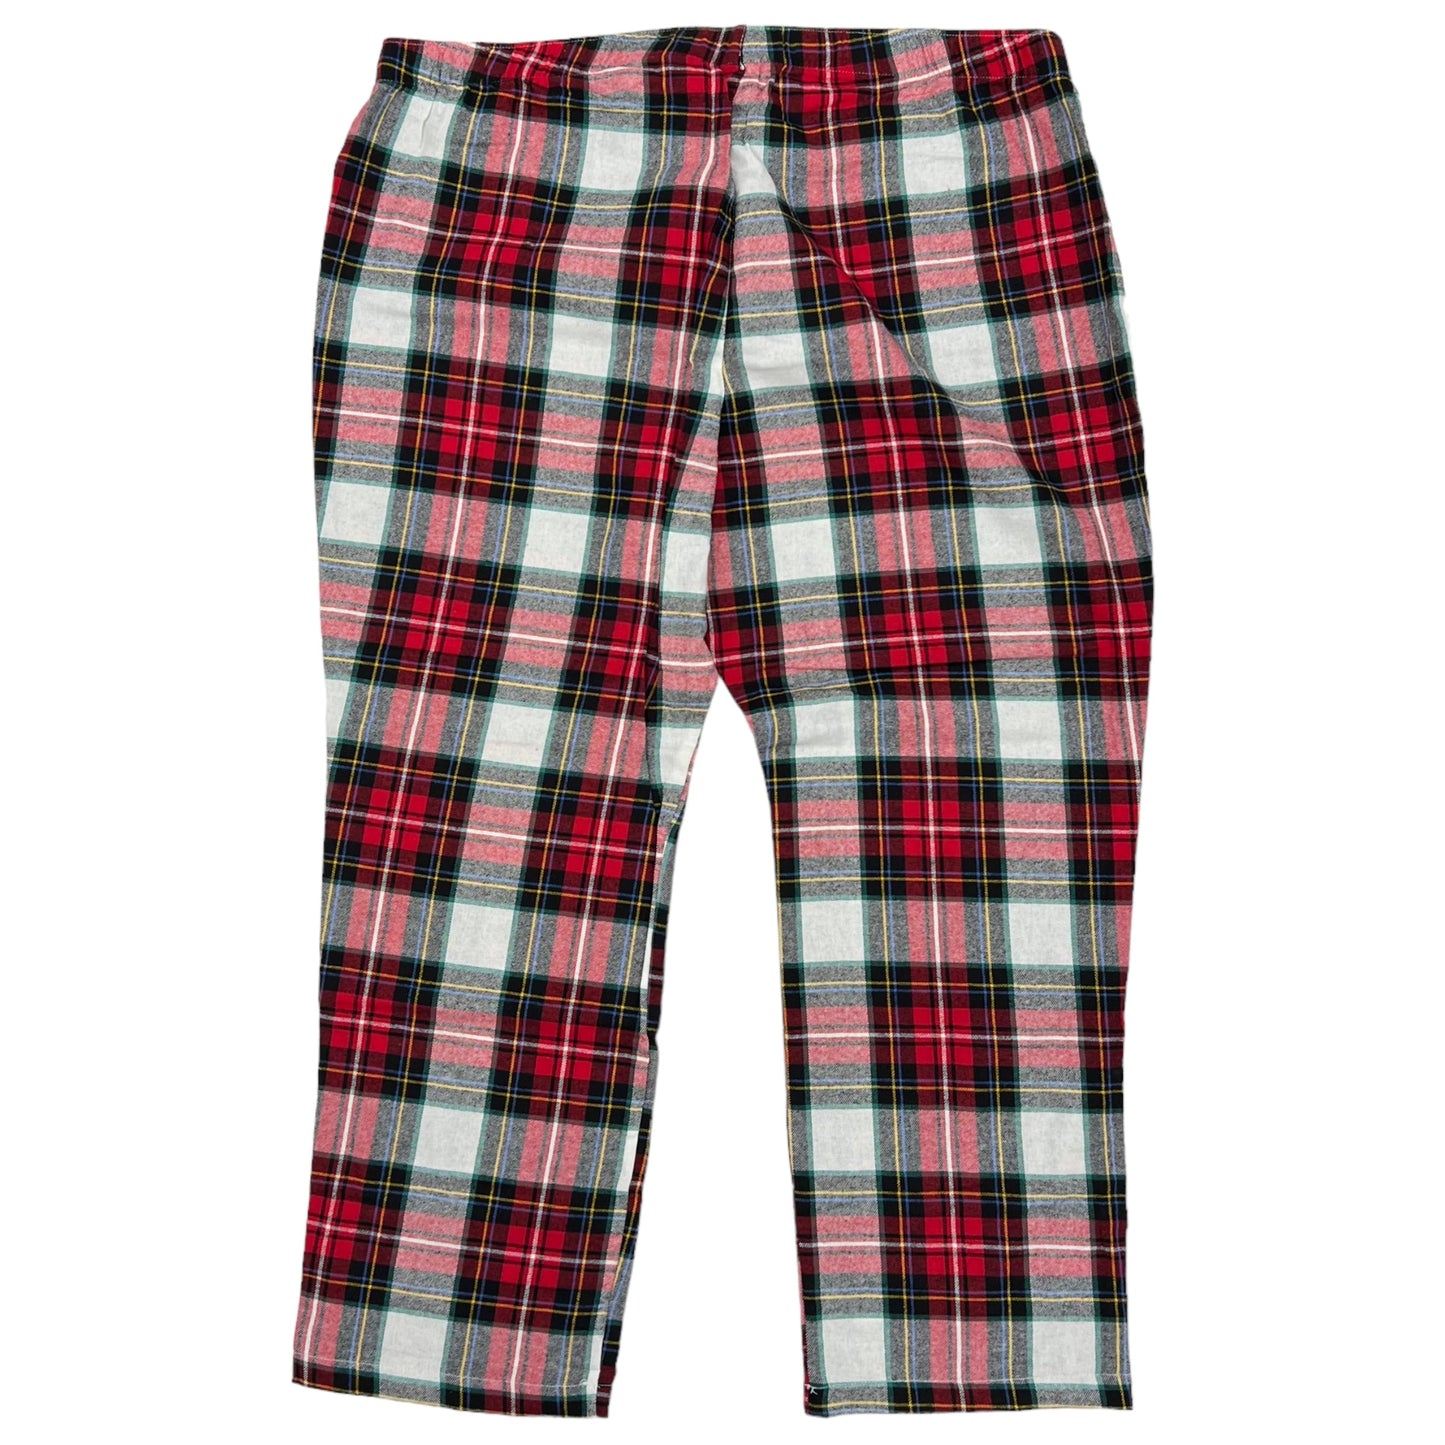 Pajama Pants By Old Navy  Size: Xxl